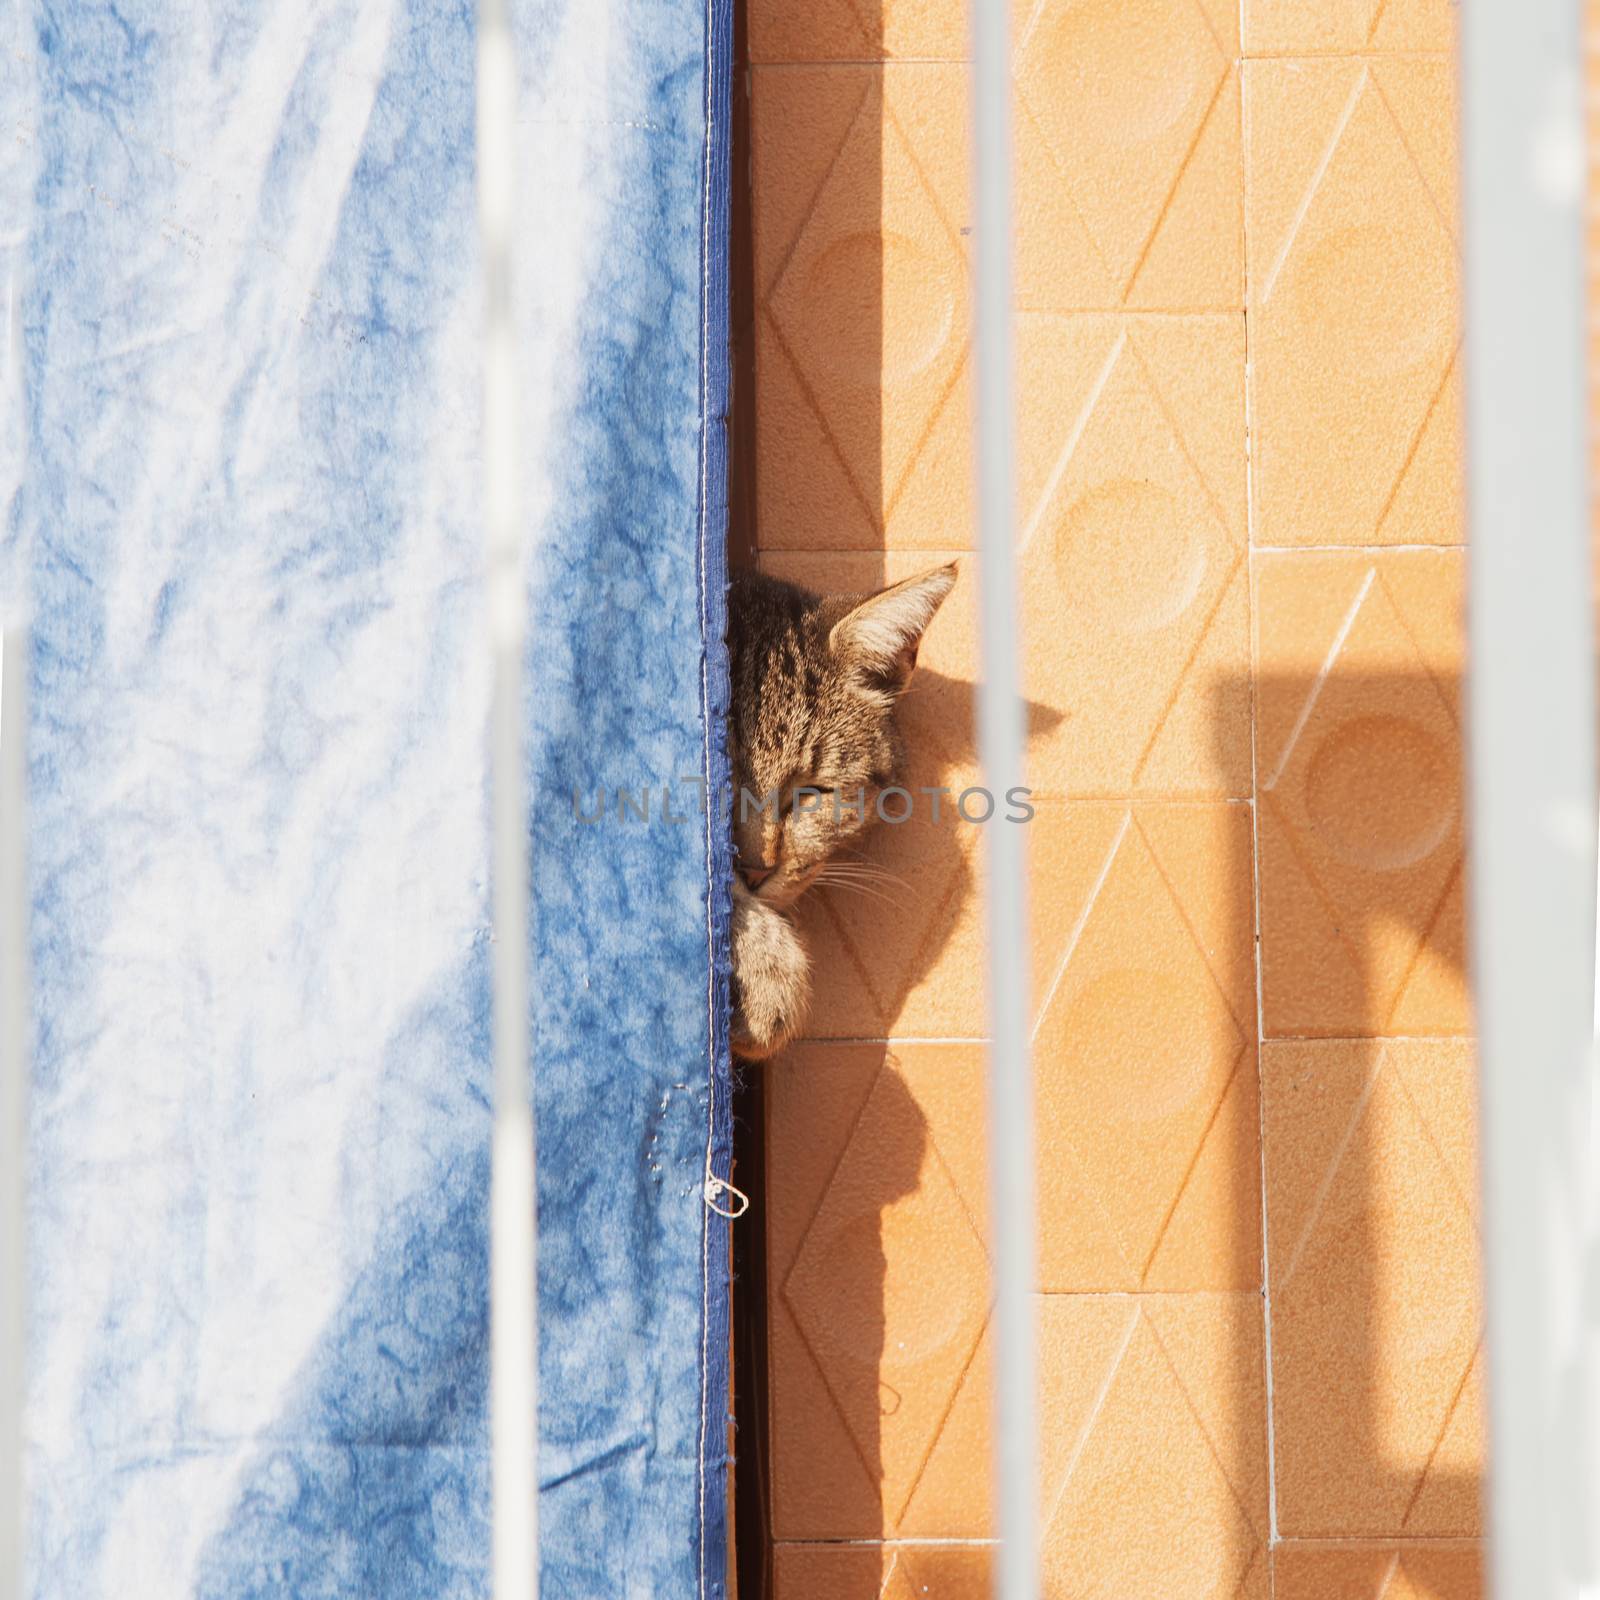 Hiding cat by Koufax73